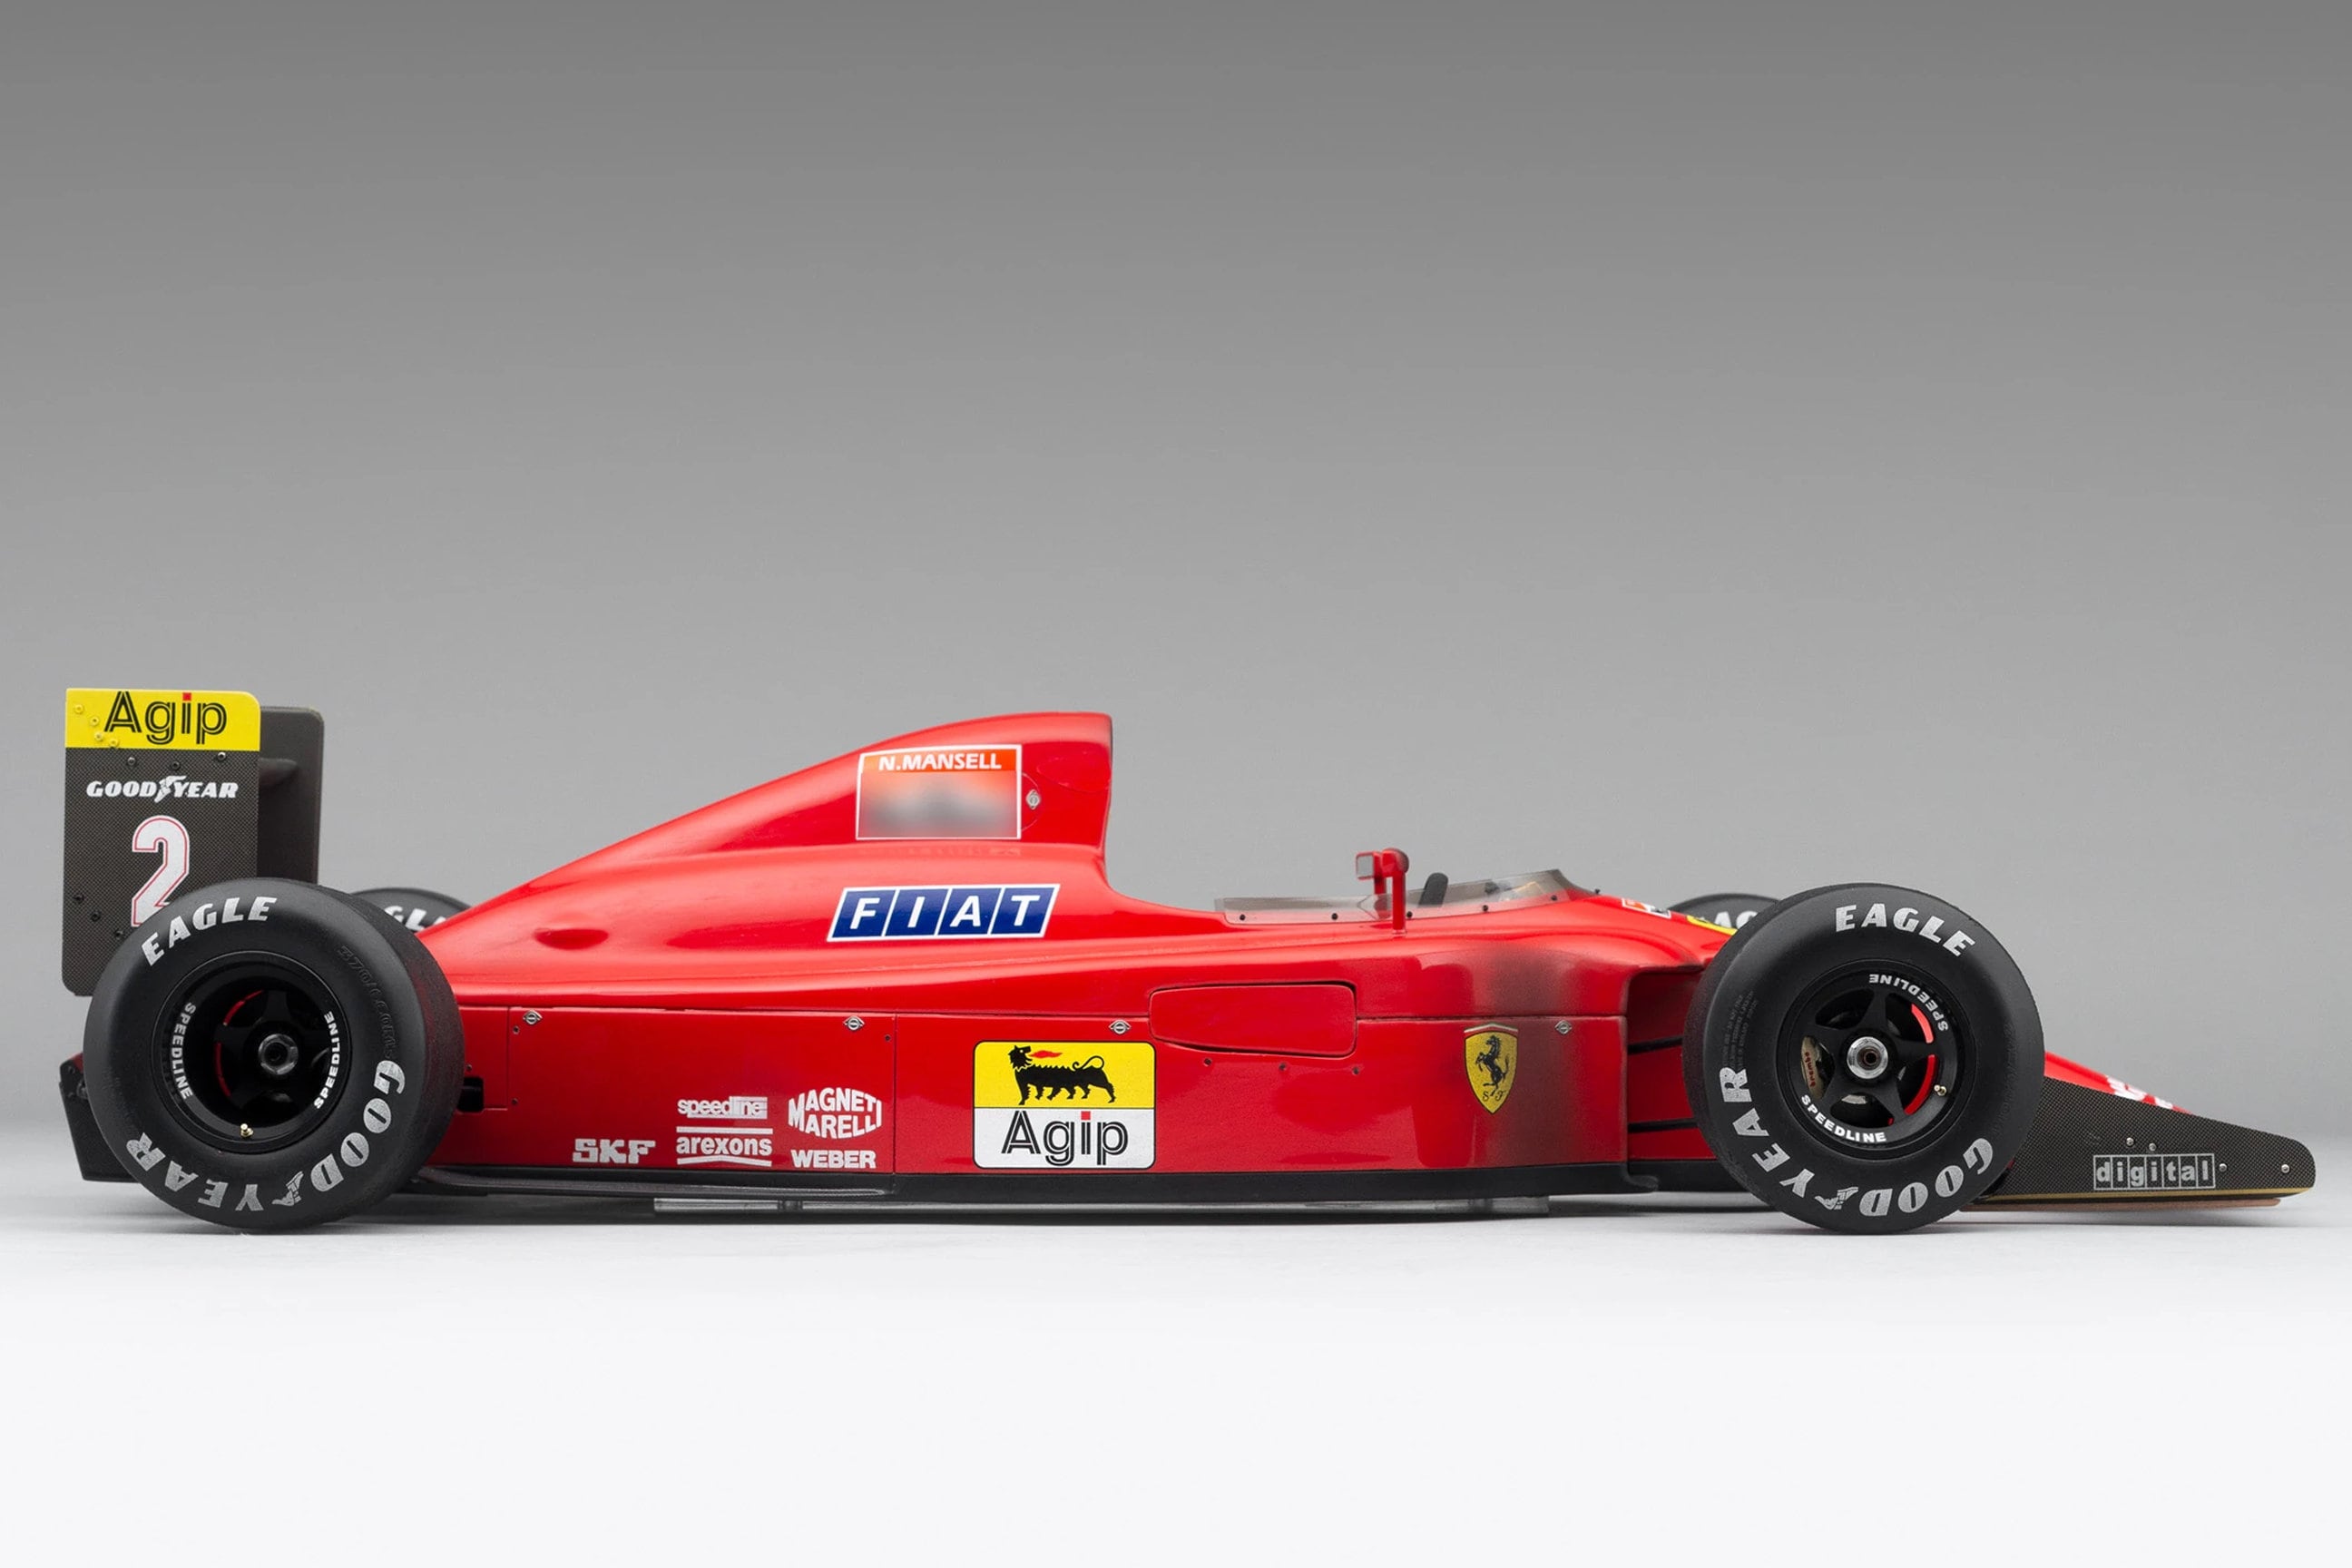 Ferrari F1-90 Grand Prix F1 Racing 4K Resolution Poster - Etsy